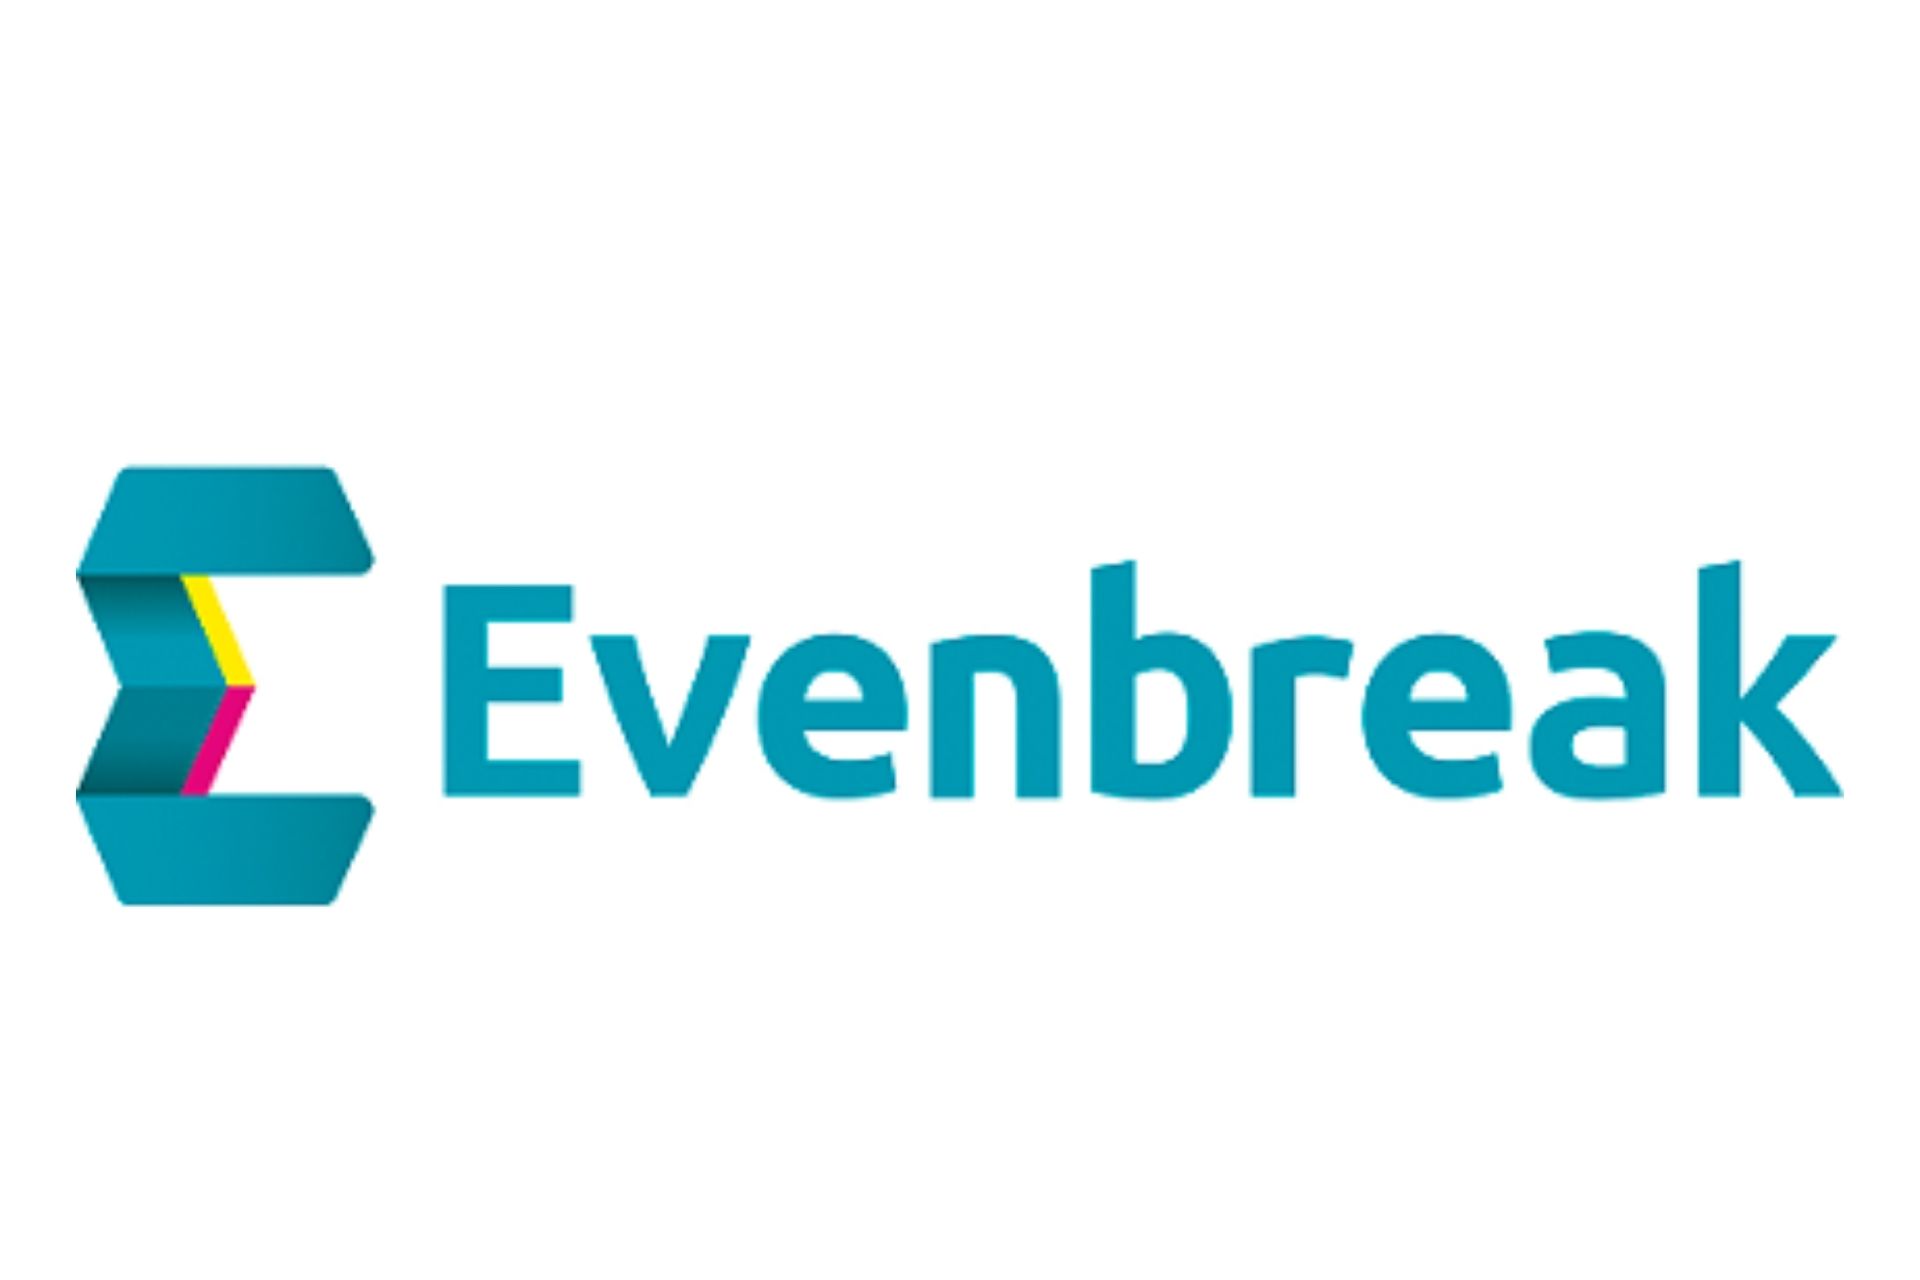 Evenbreak logos